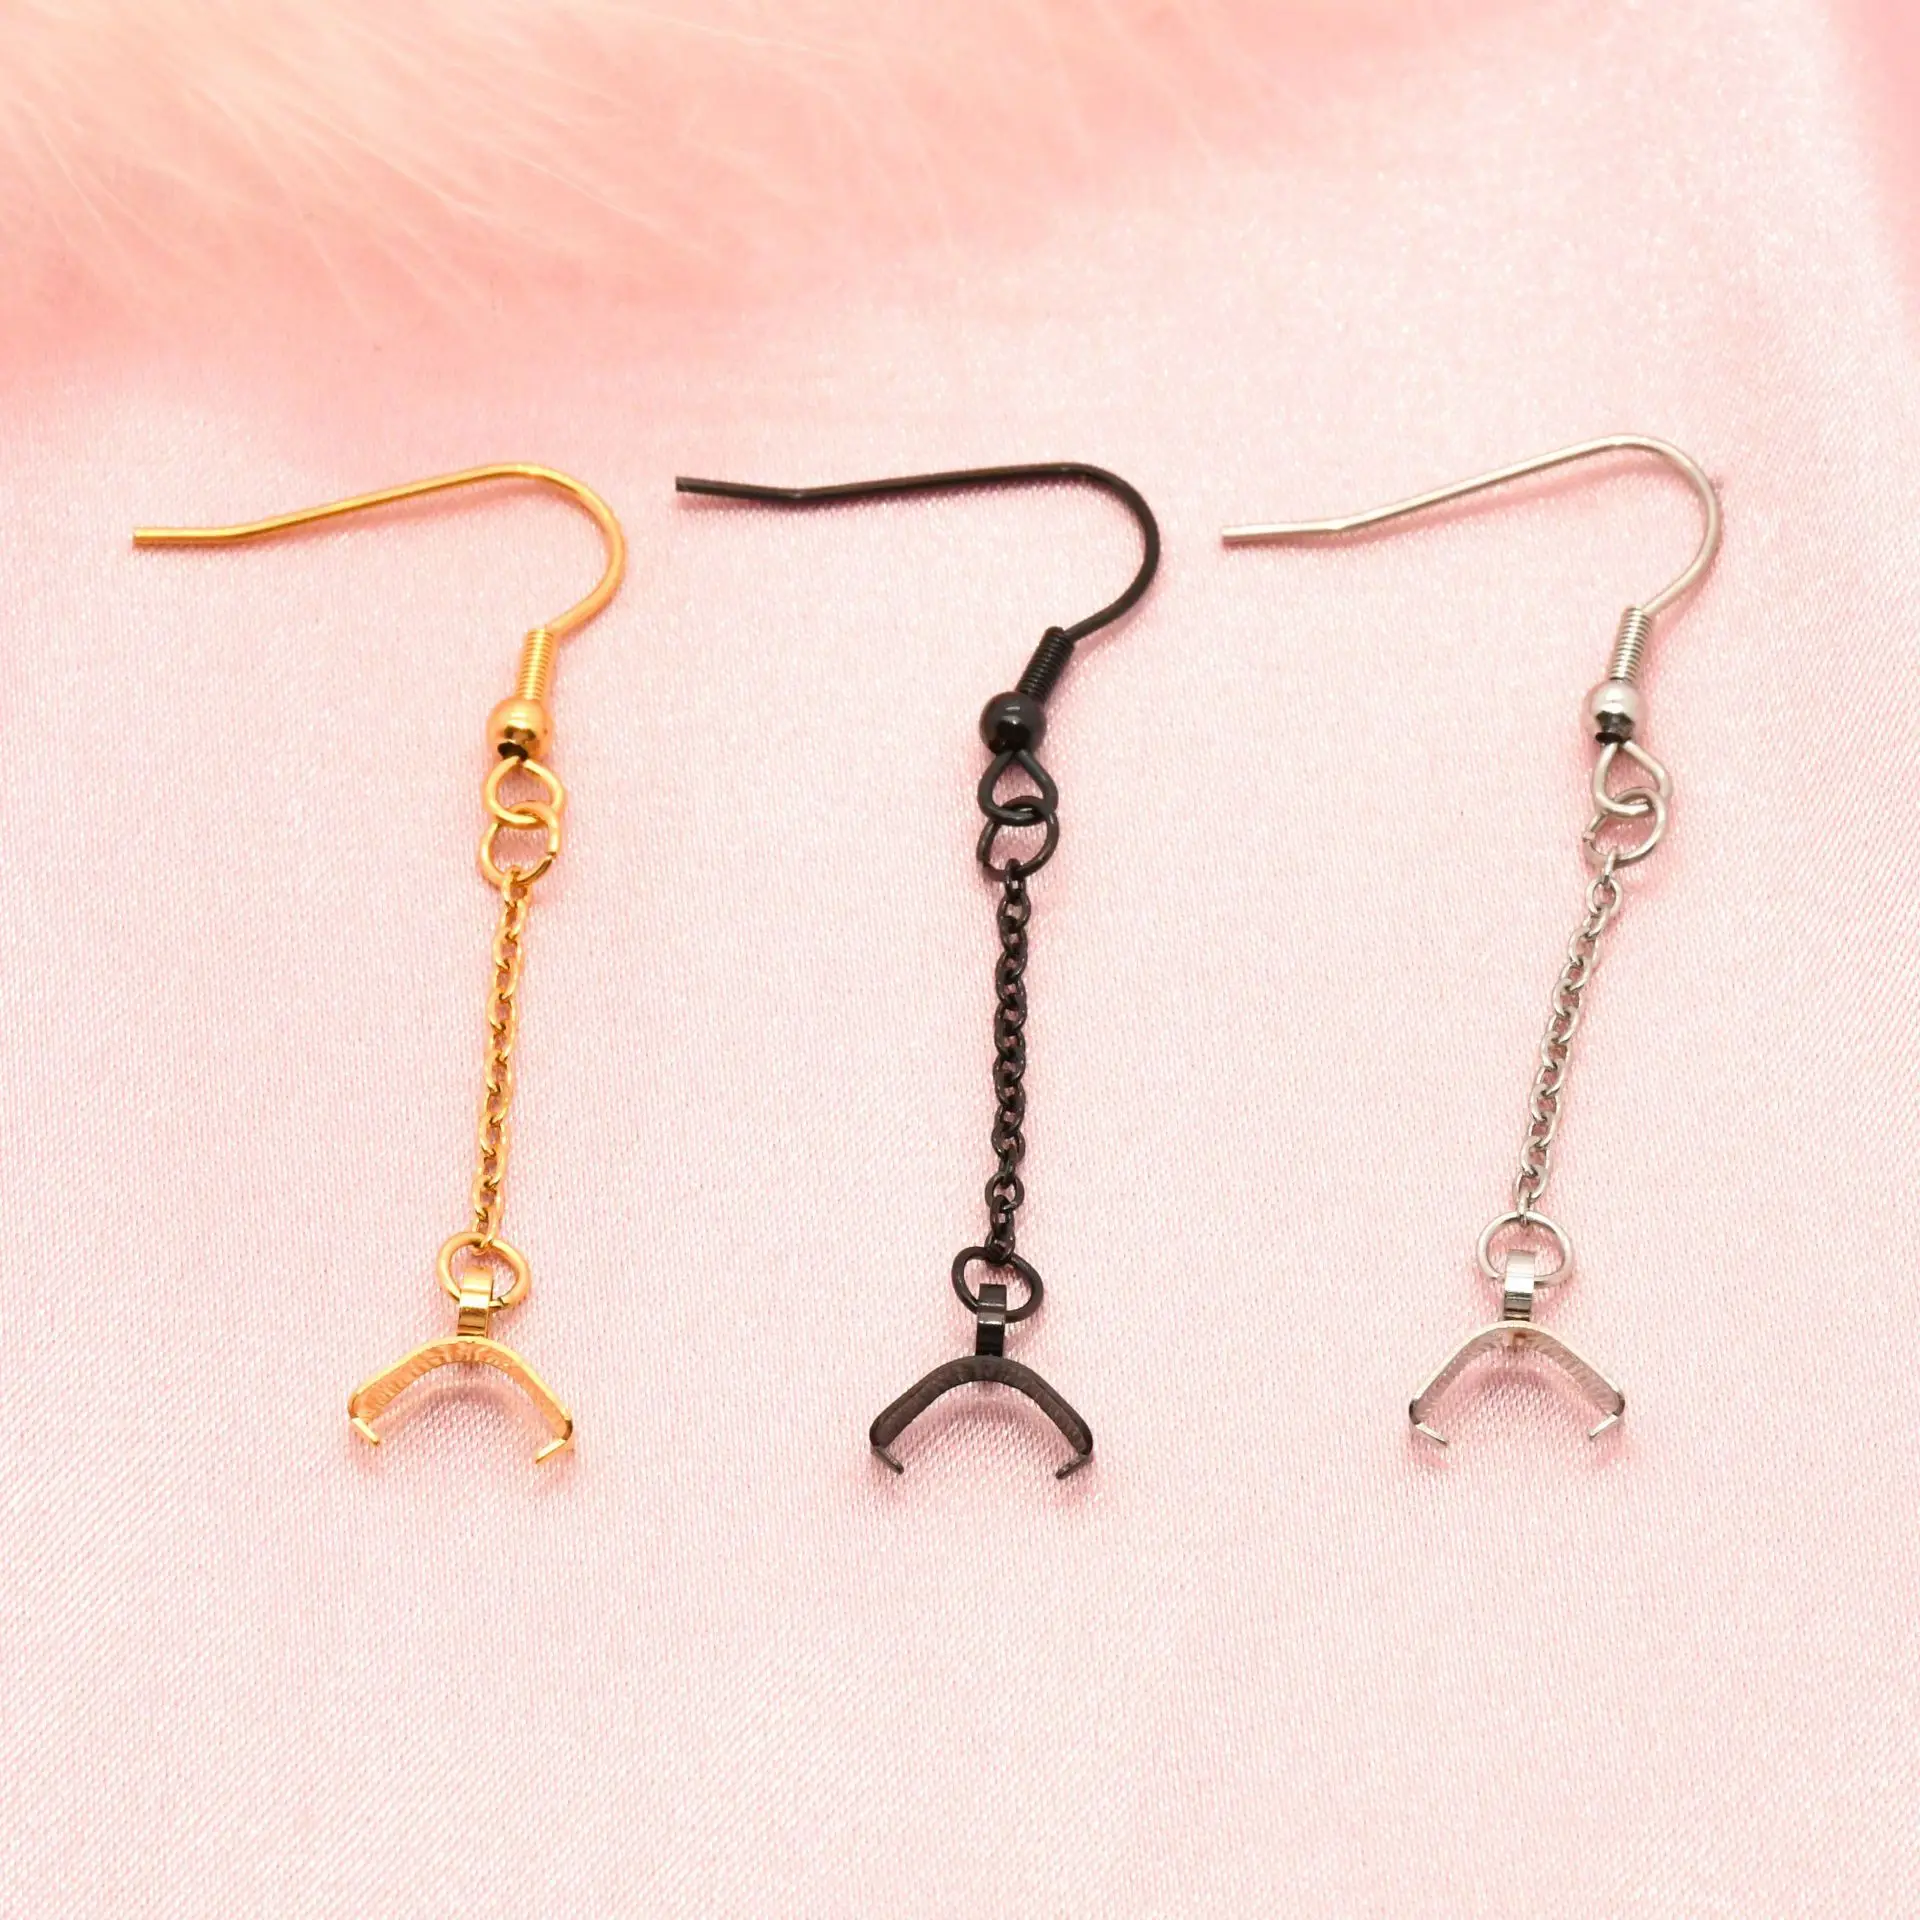 

Stainless Steel Clamp earring findings piercing jewelry diy DIY Earring Drop Component Gold plated dangle tassel earrings hooks